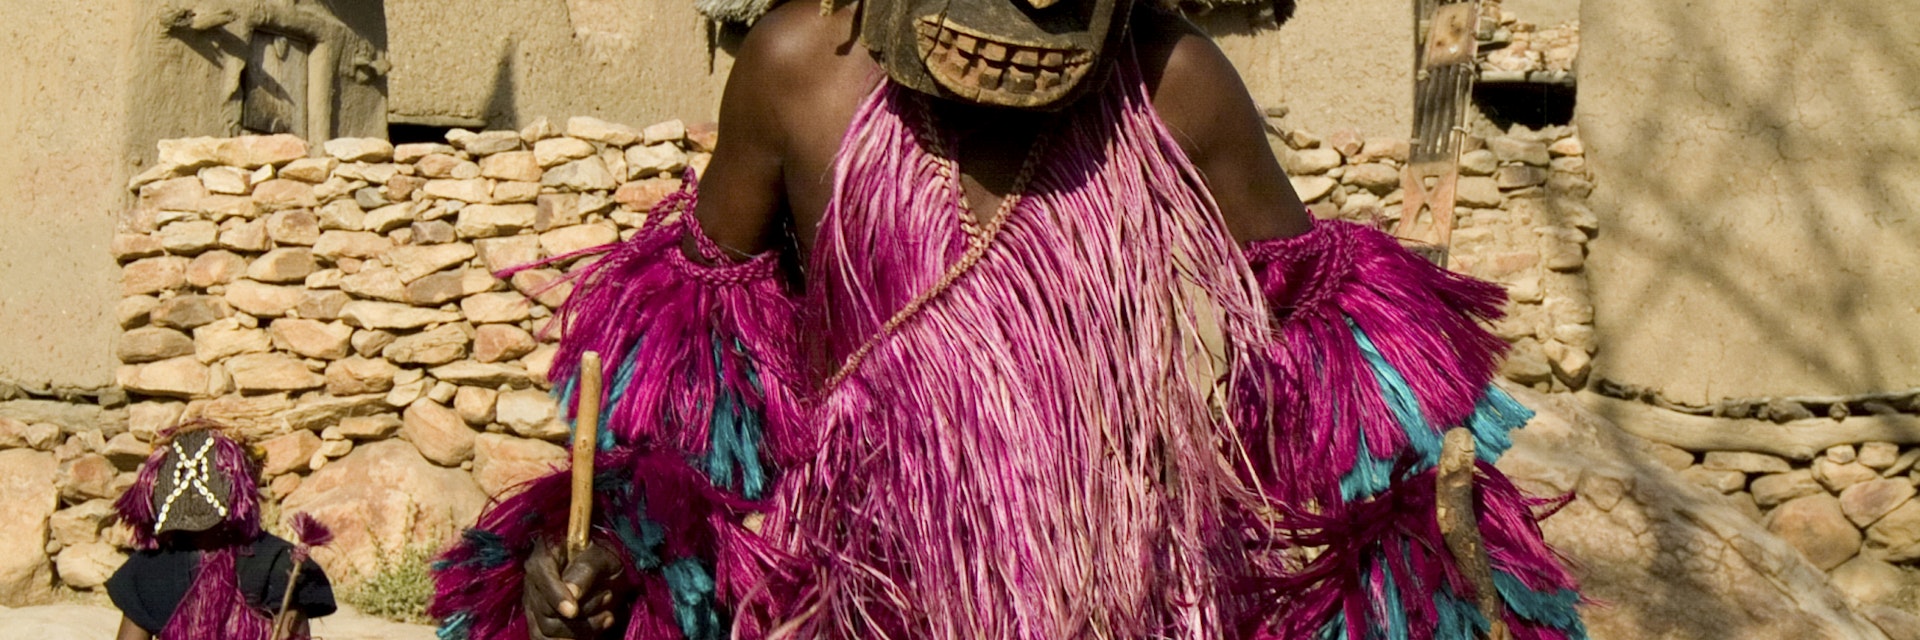 Mali, Dogon, Tirelli, dogon's traditional dance